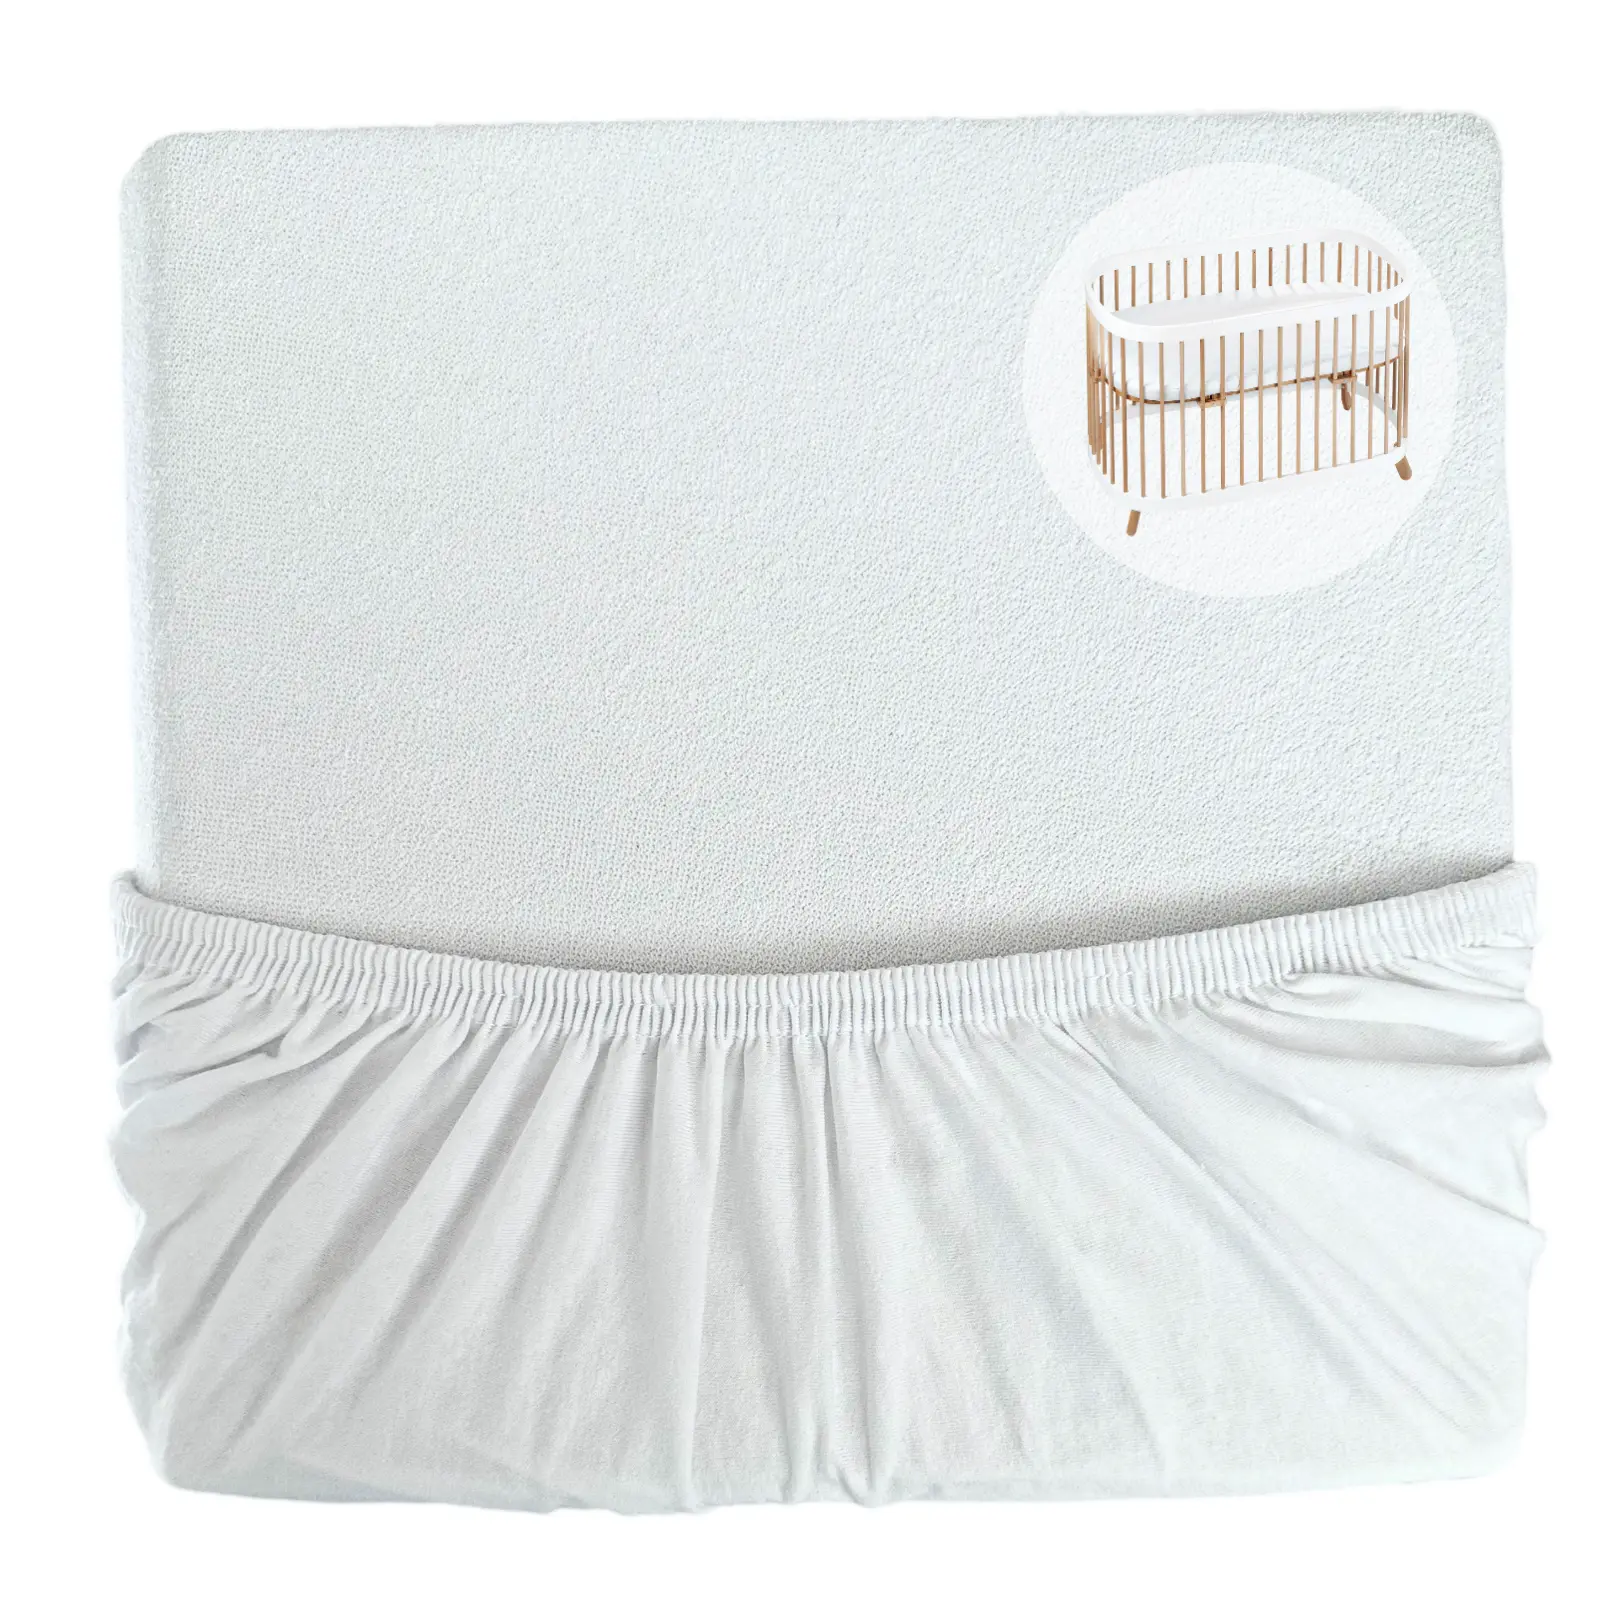 mattress protector - moisture protection - MAXI - 70x120